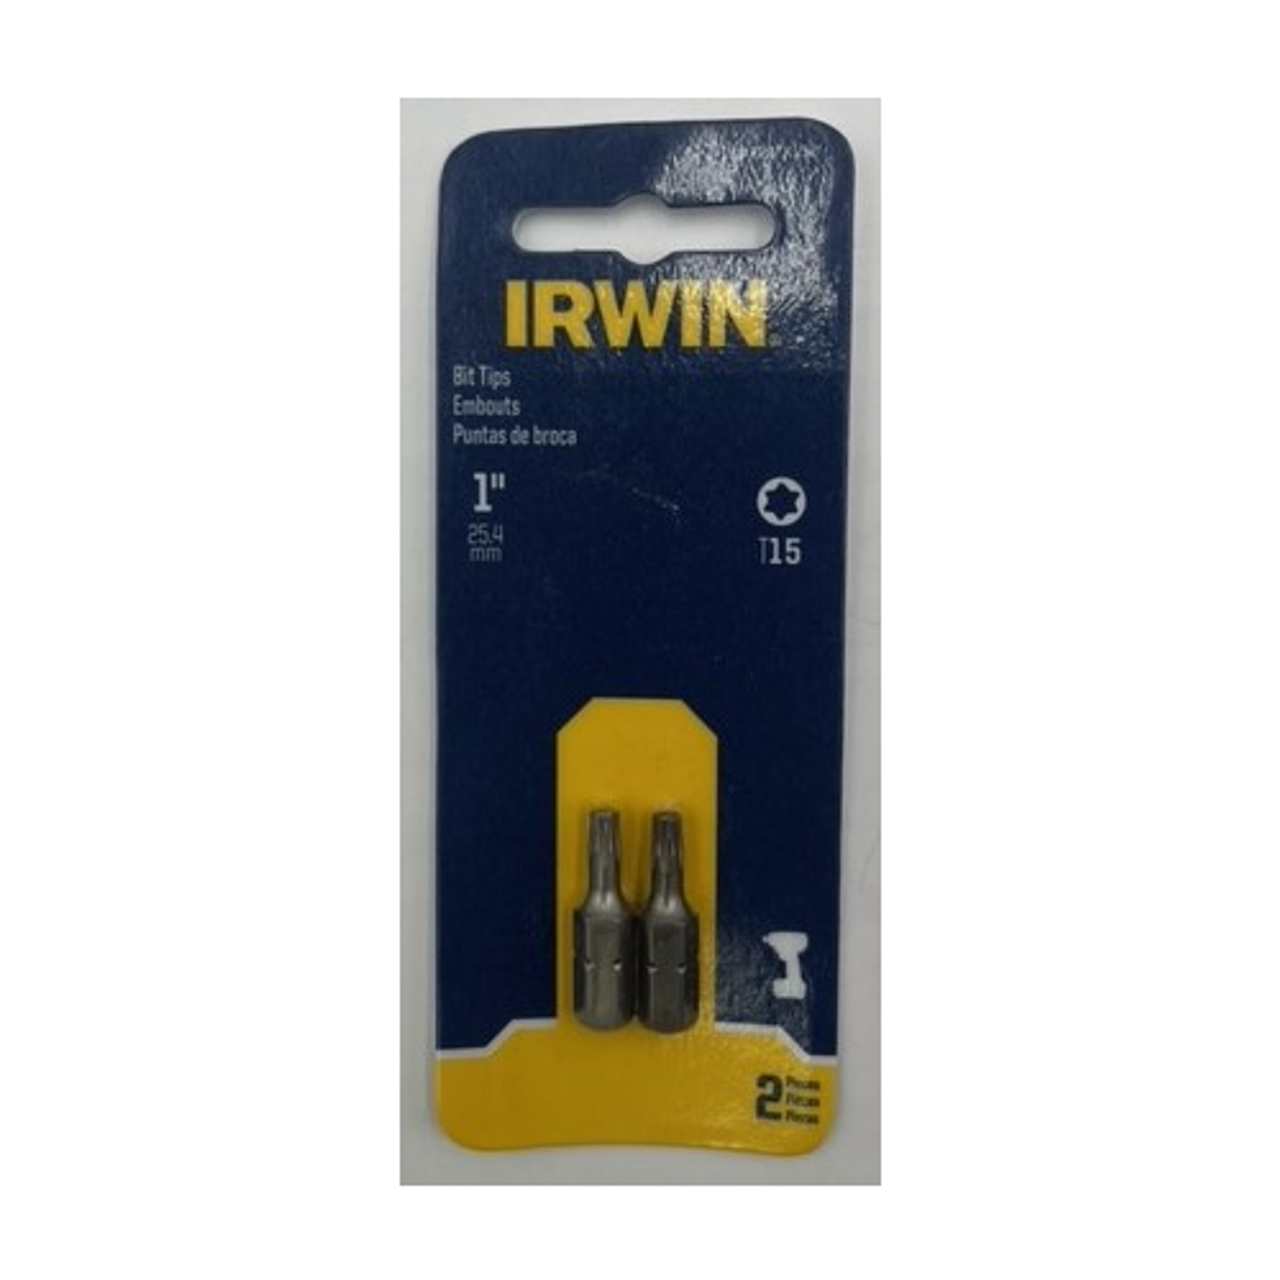 Irwin IWAF21TX152 Torx Insert Bits T15, 1 inch length - 2 pack